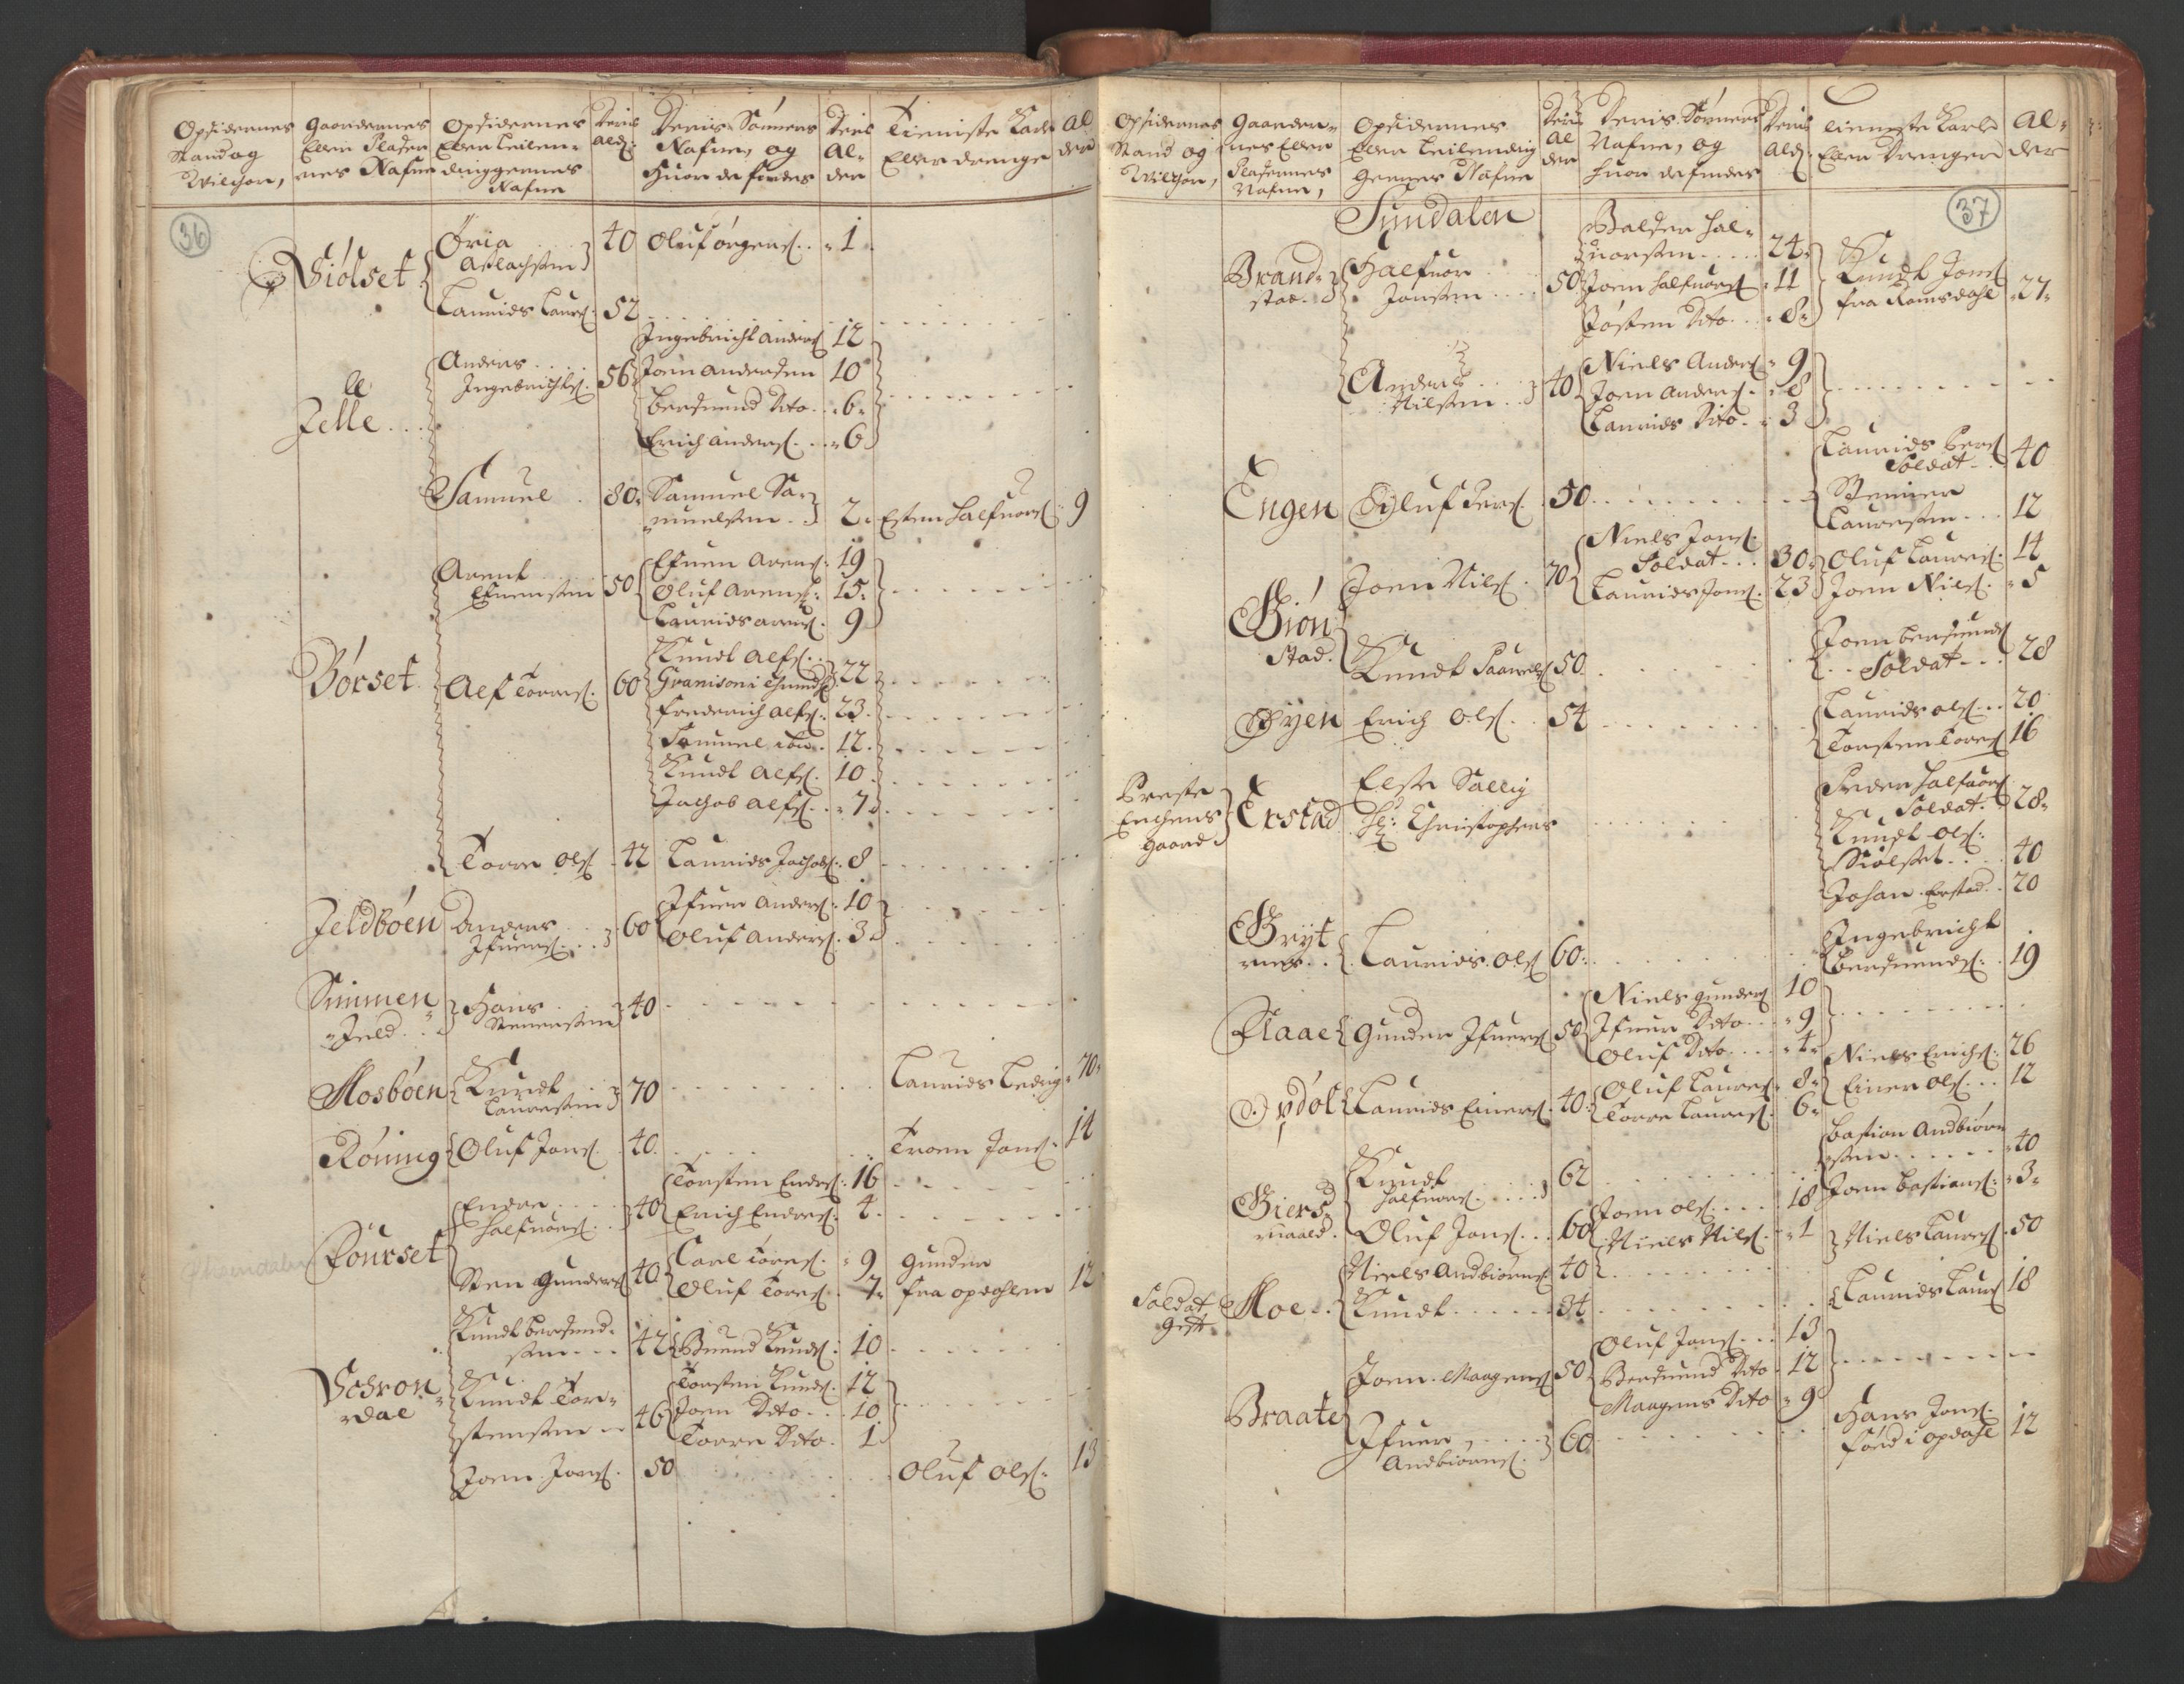 RA, Census (manntall) 1701, no. 11: Nordmøre fogderi and Romsdal fogderi, 1701, p. 36-37